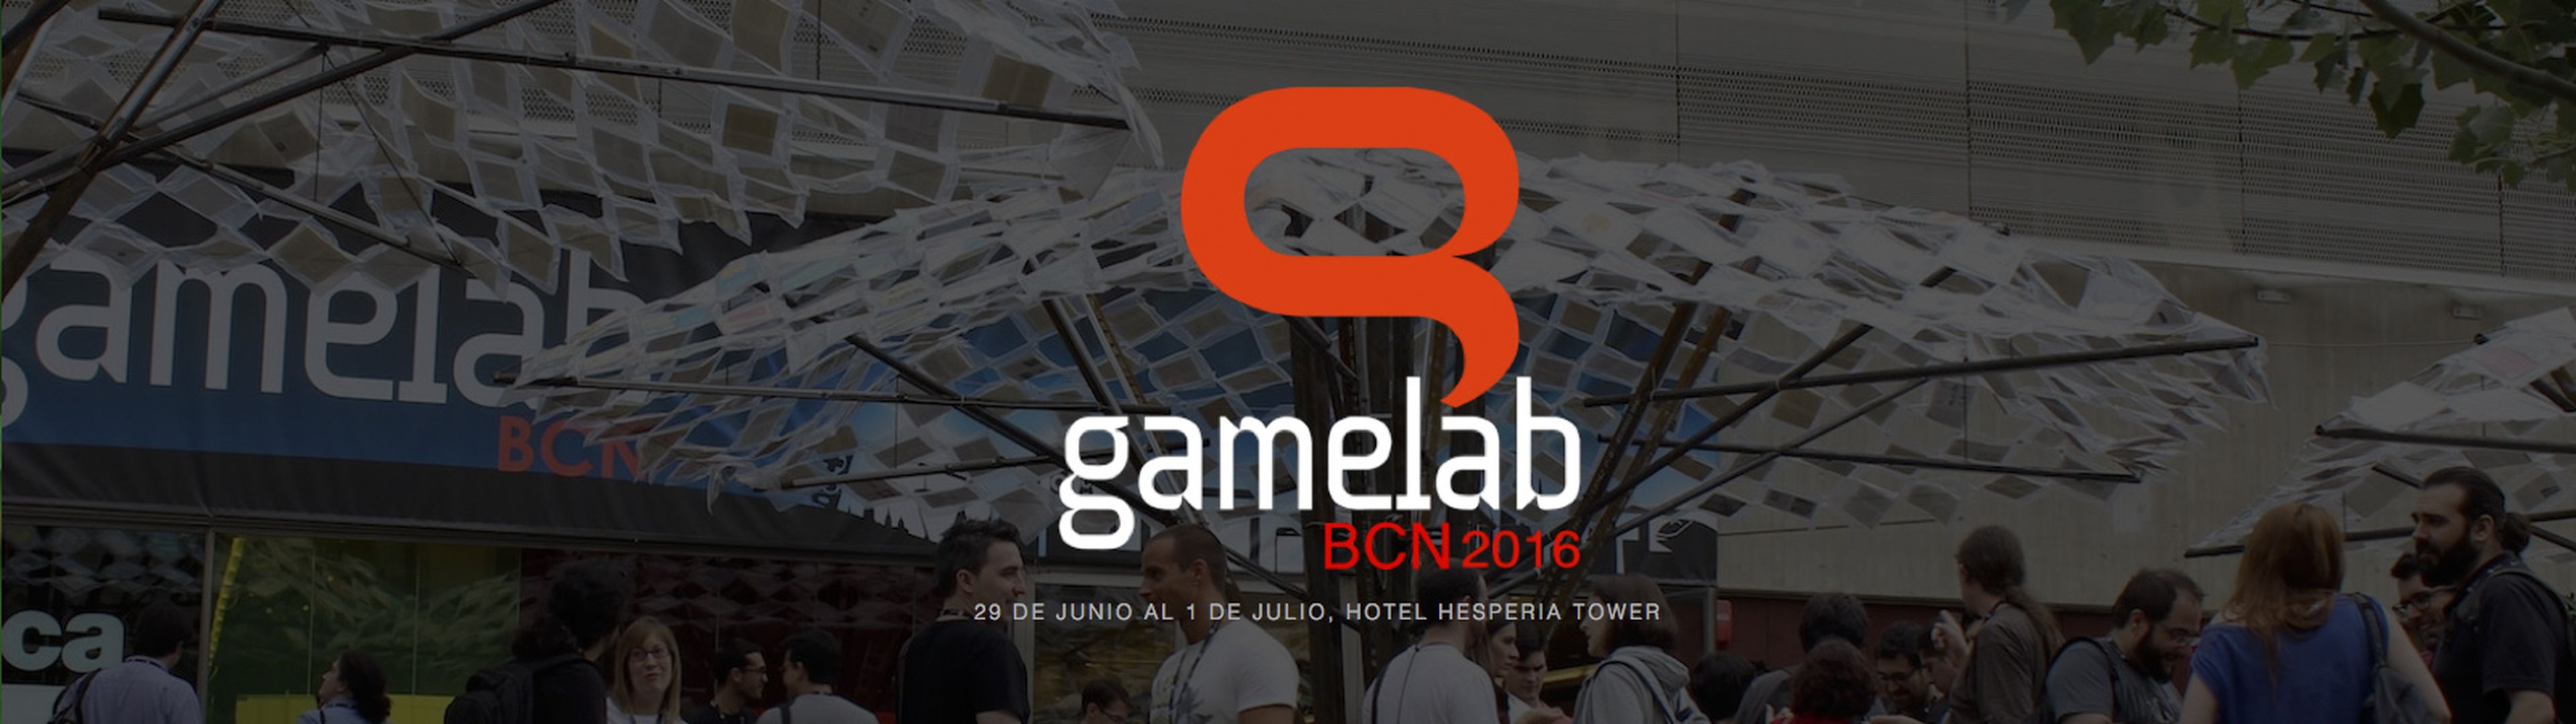 Gamelab 2016 cabecera